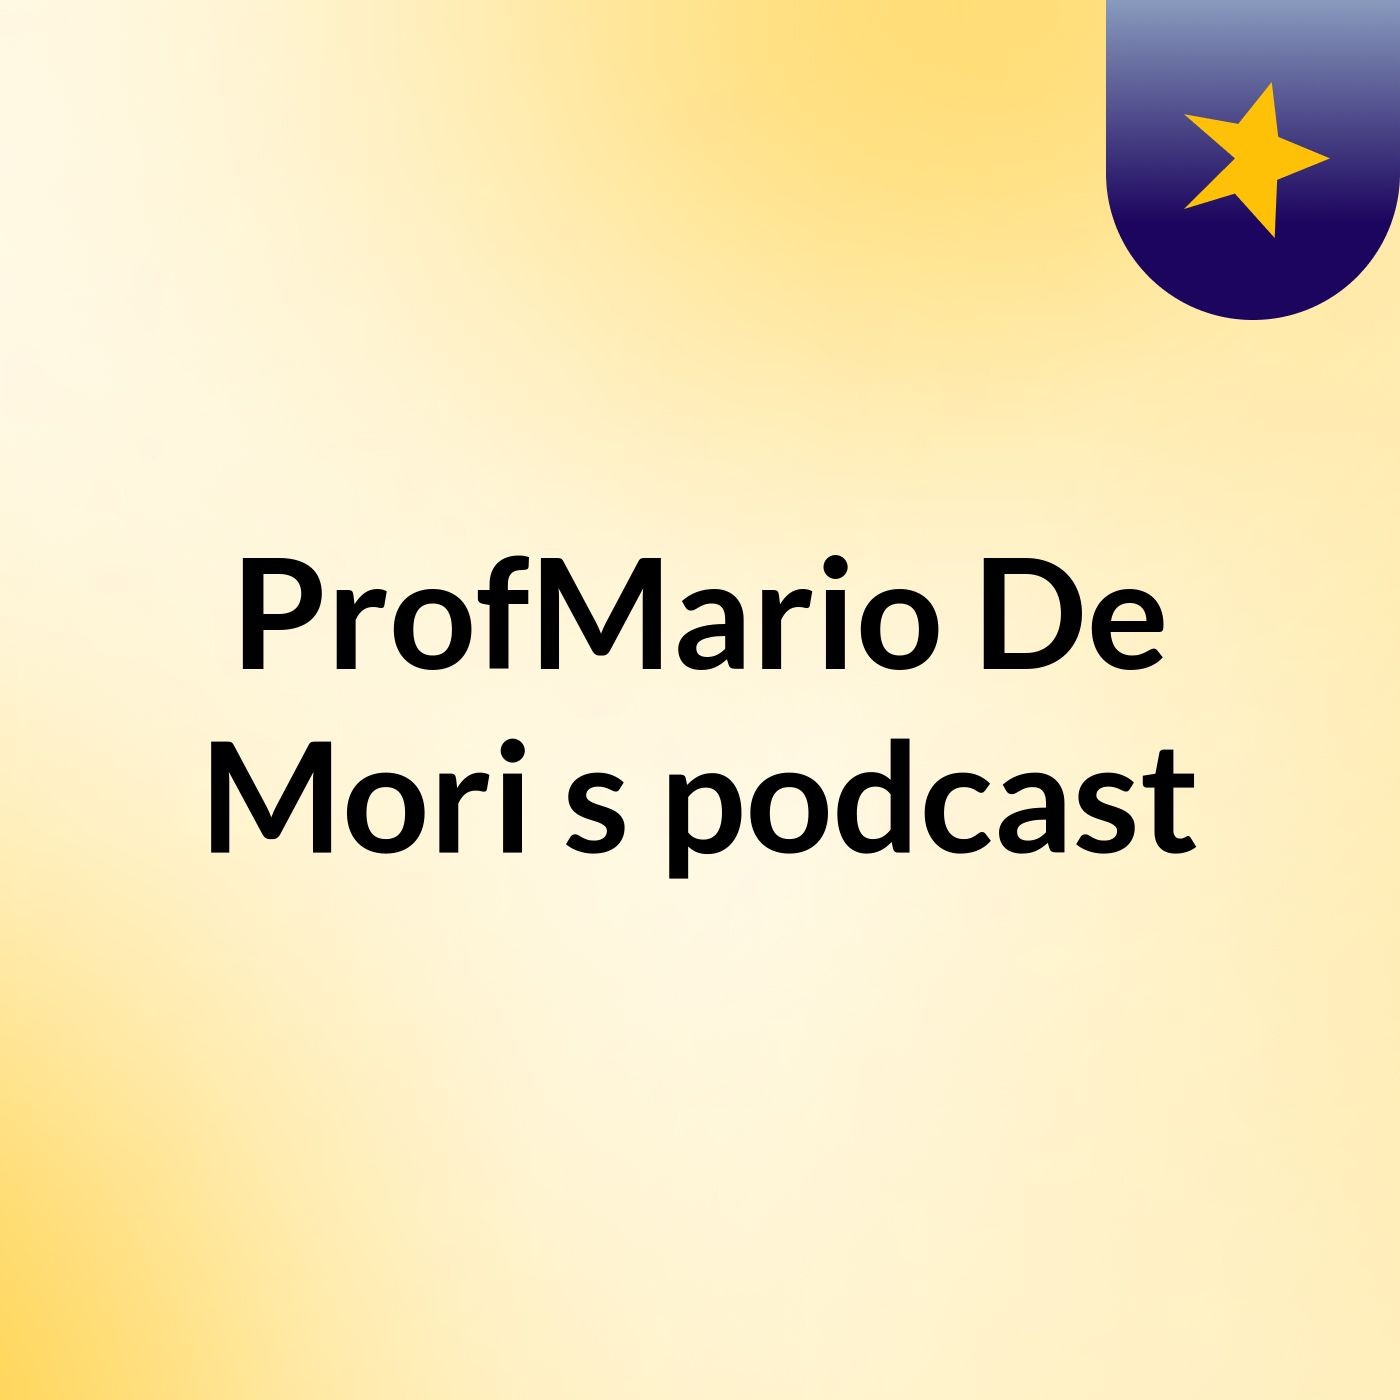 ProfMario De Mori's podcast